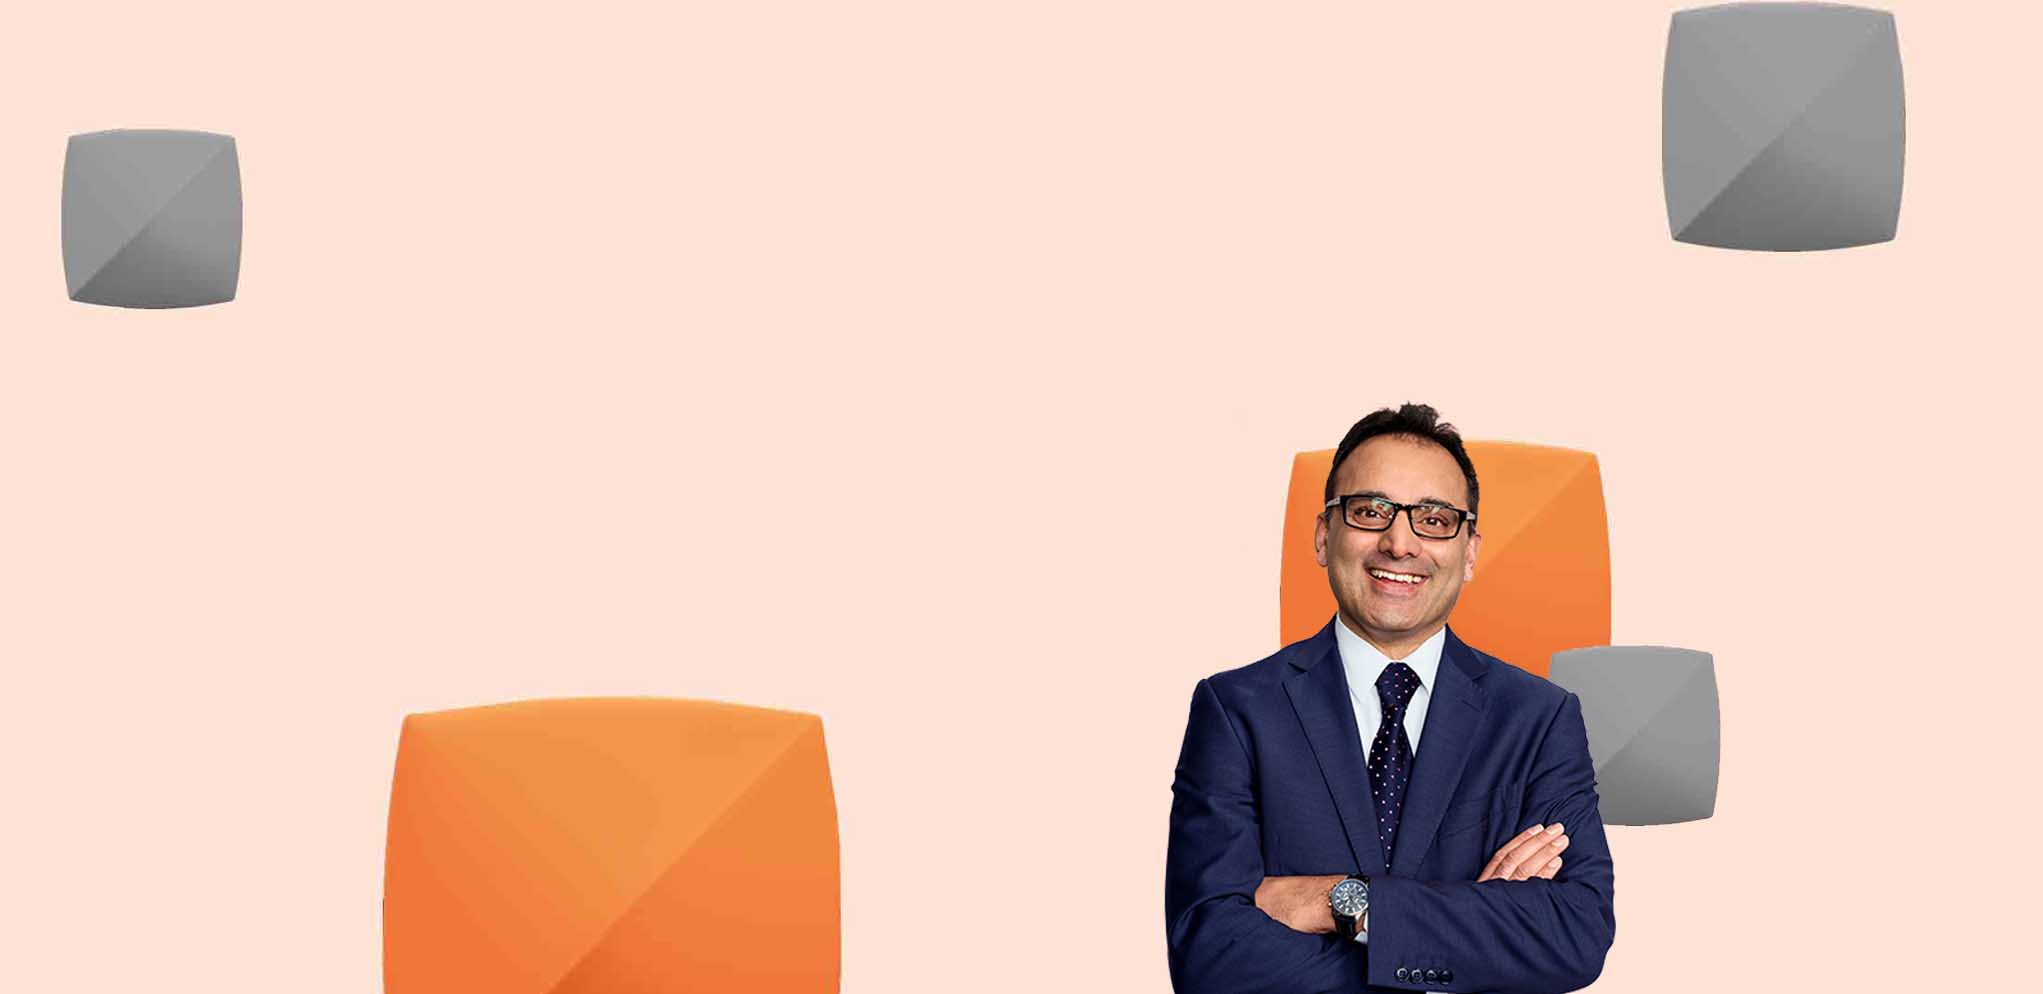 Smiling man on orange background